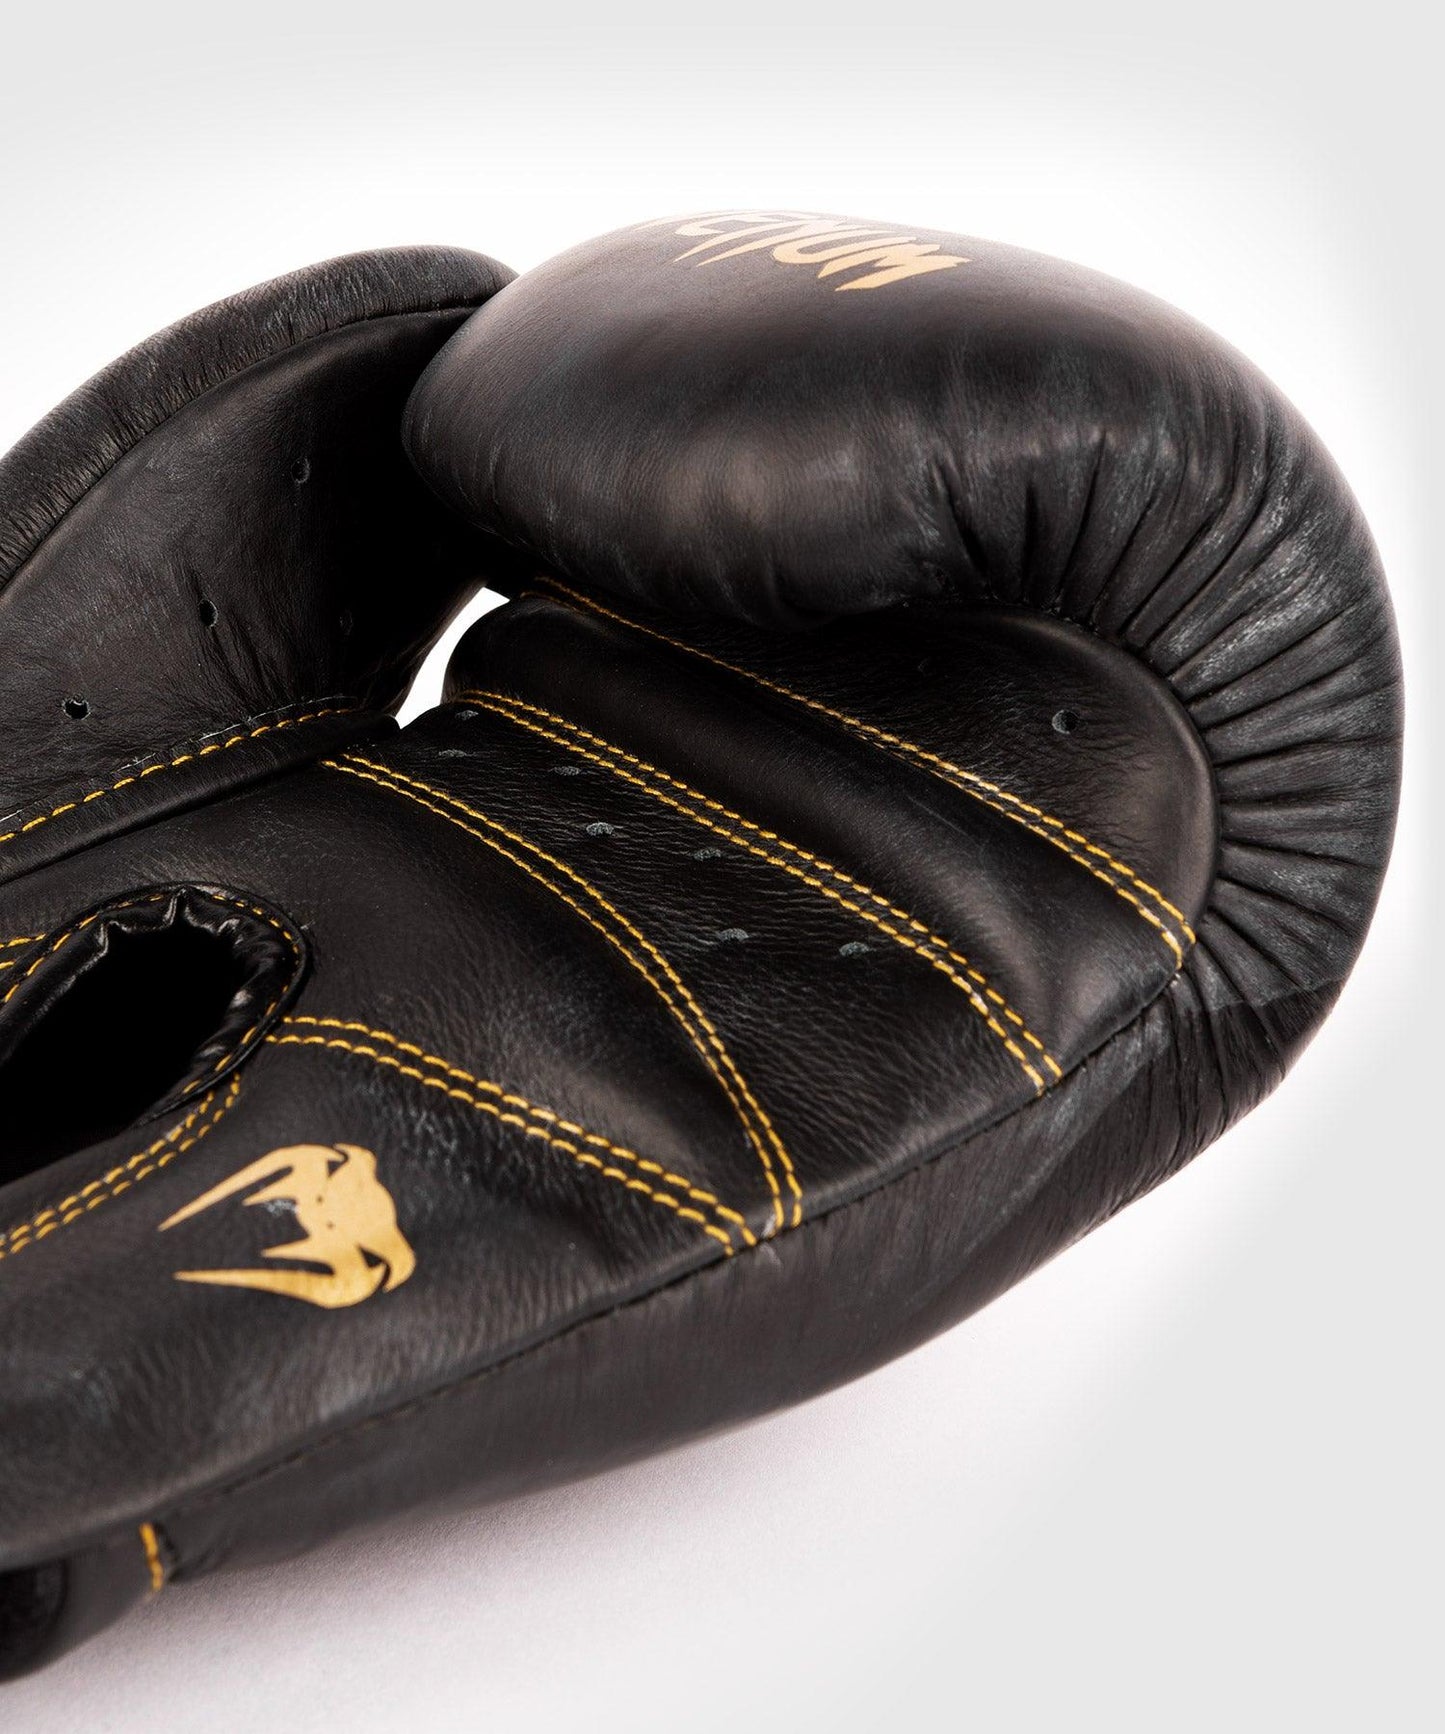 Venum Giant 2.0 Pro Boxing Gloves Velcro - Black/Black-Gold Picture 5